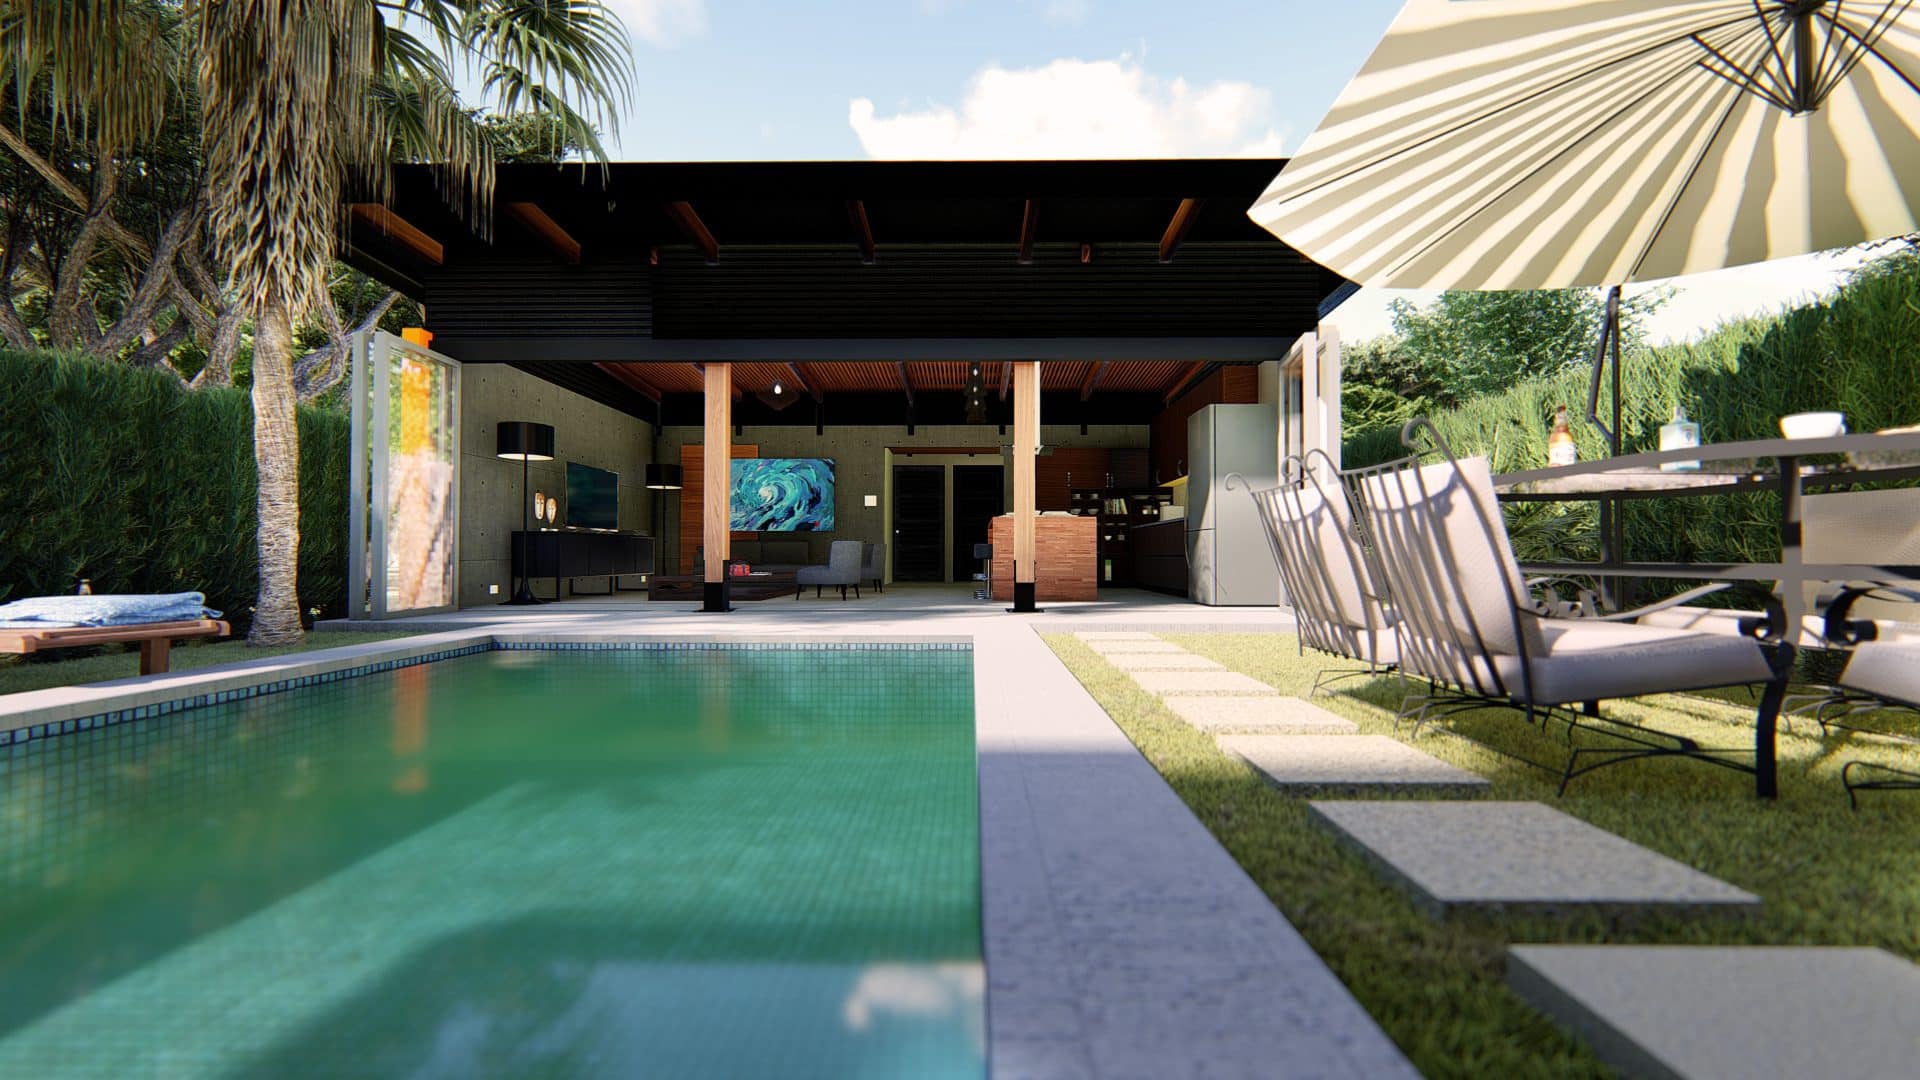 Real Estate Income property or Main House !!! close to Tamarindo Beach ...